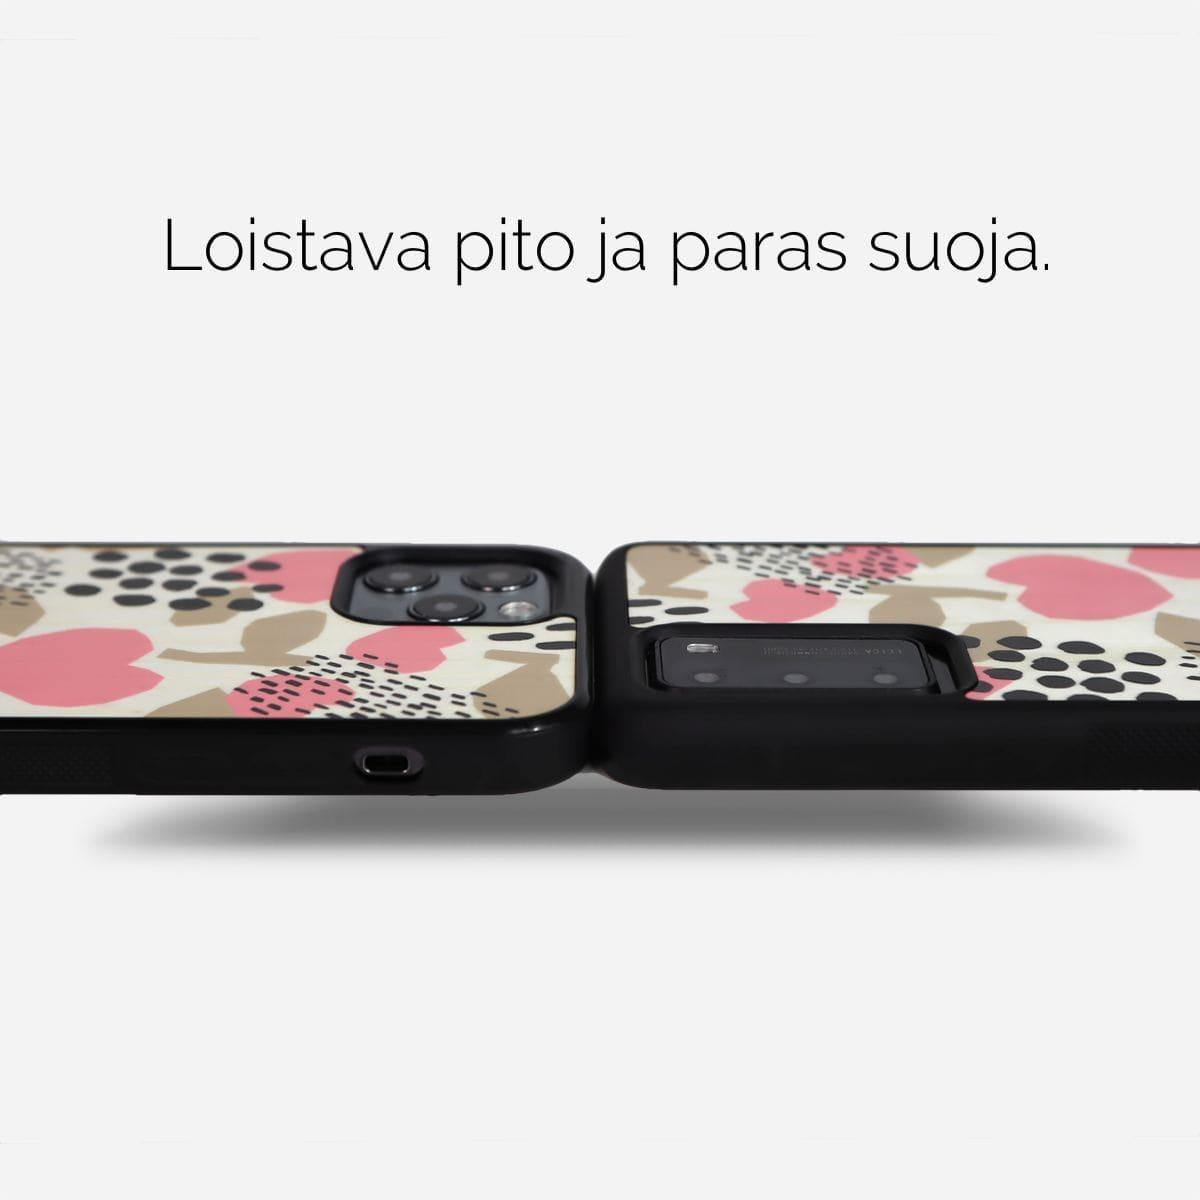 LASTU x RATIA - Onni - Lastu - Nordic Wooden Phone Cases - Ratia Cases - Design Collection, Ratia